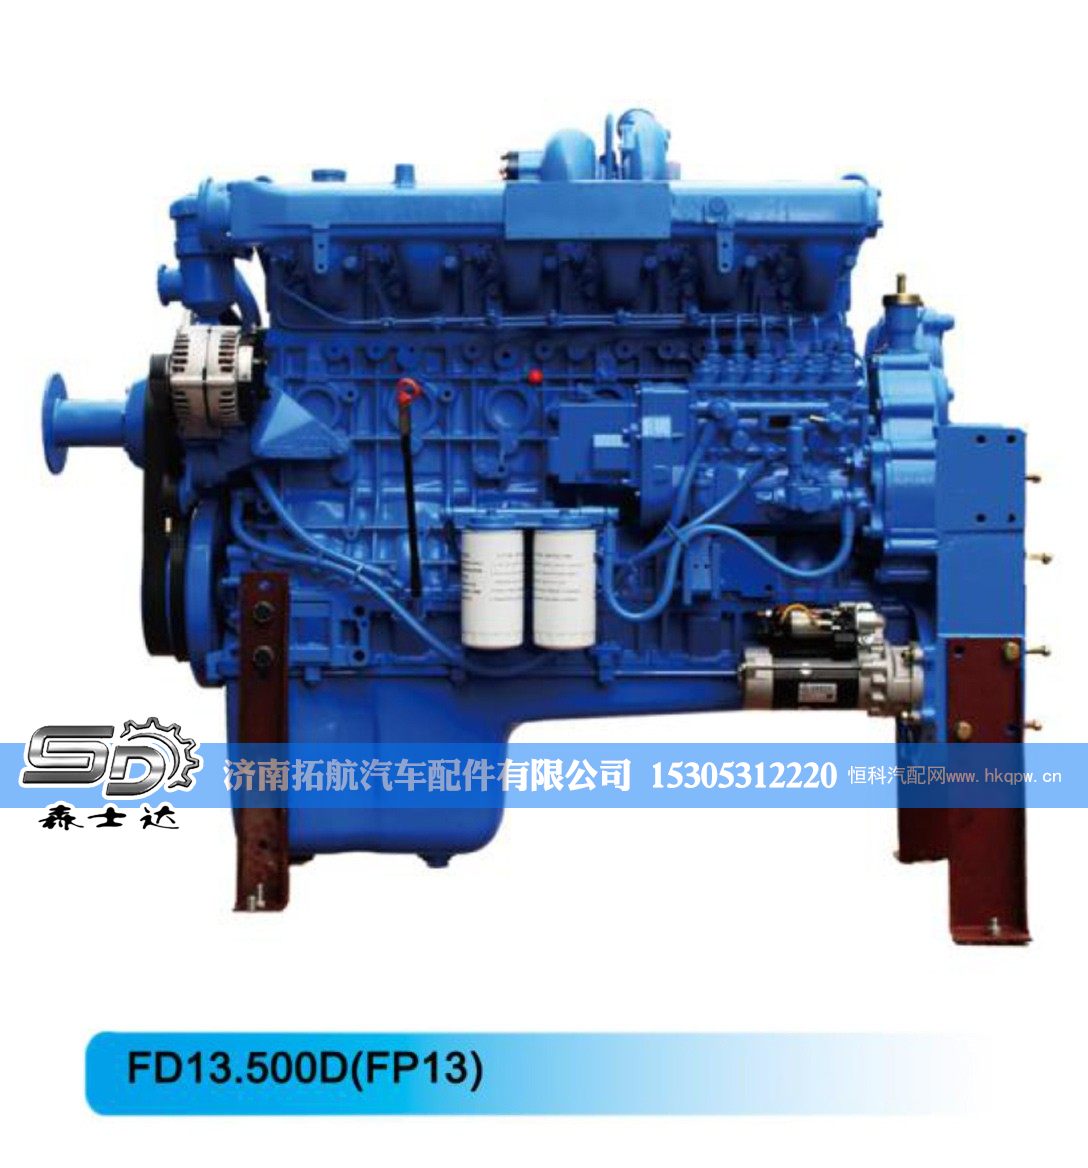 FD13.500D(FP13),FD13.500D(FP13)发电机系列 发动机,济南拓航汽车配件有限公司